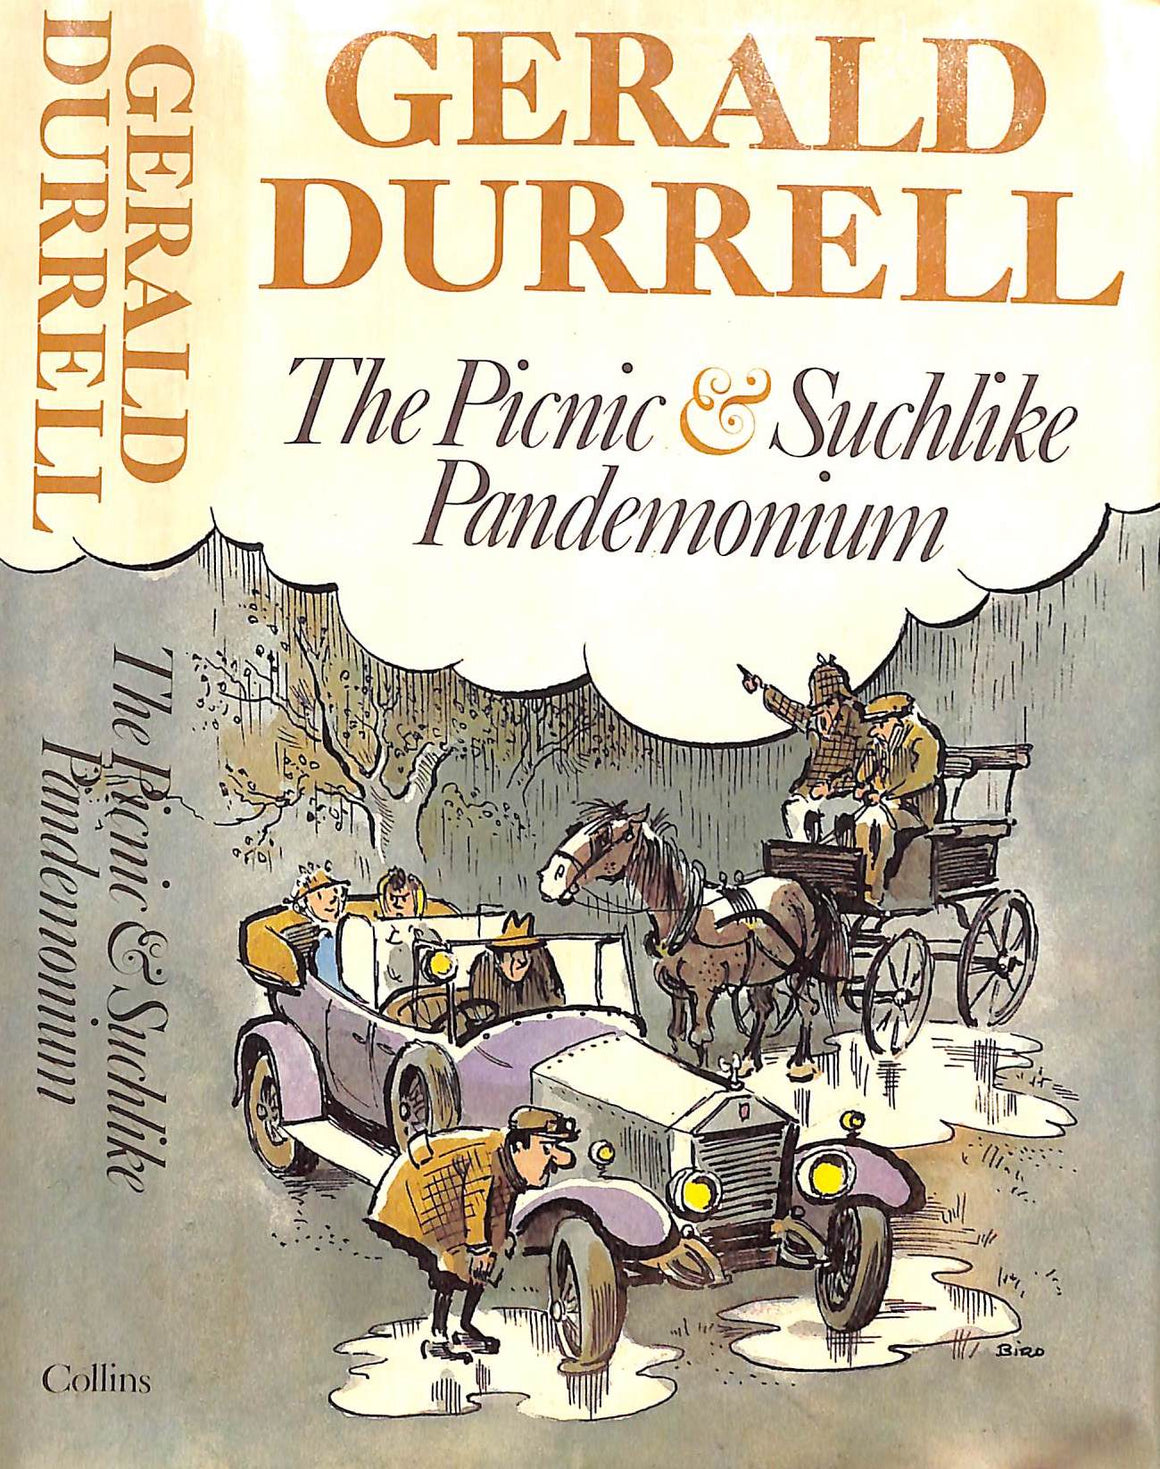 "The Picnic & Suchlike Pandemonium" 1979 DURRELL, Gerald